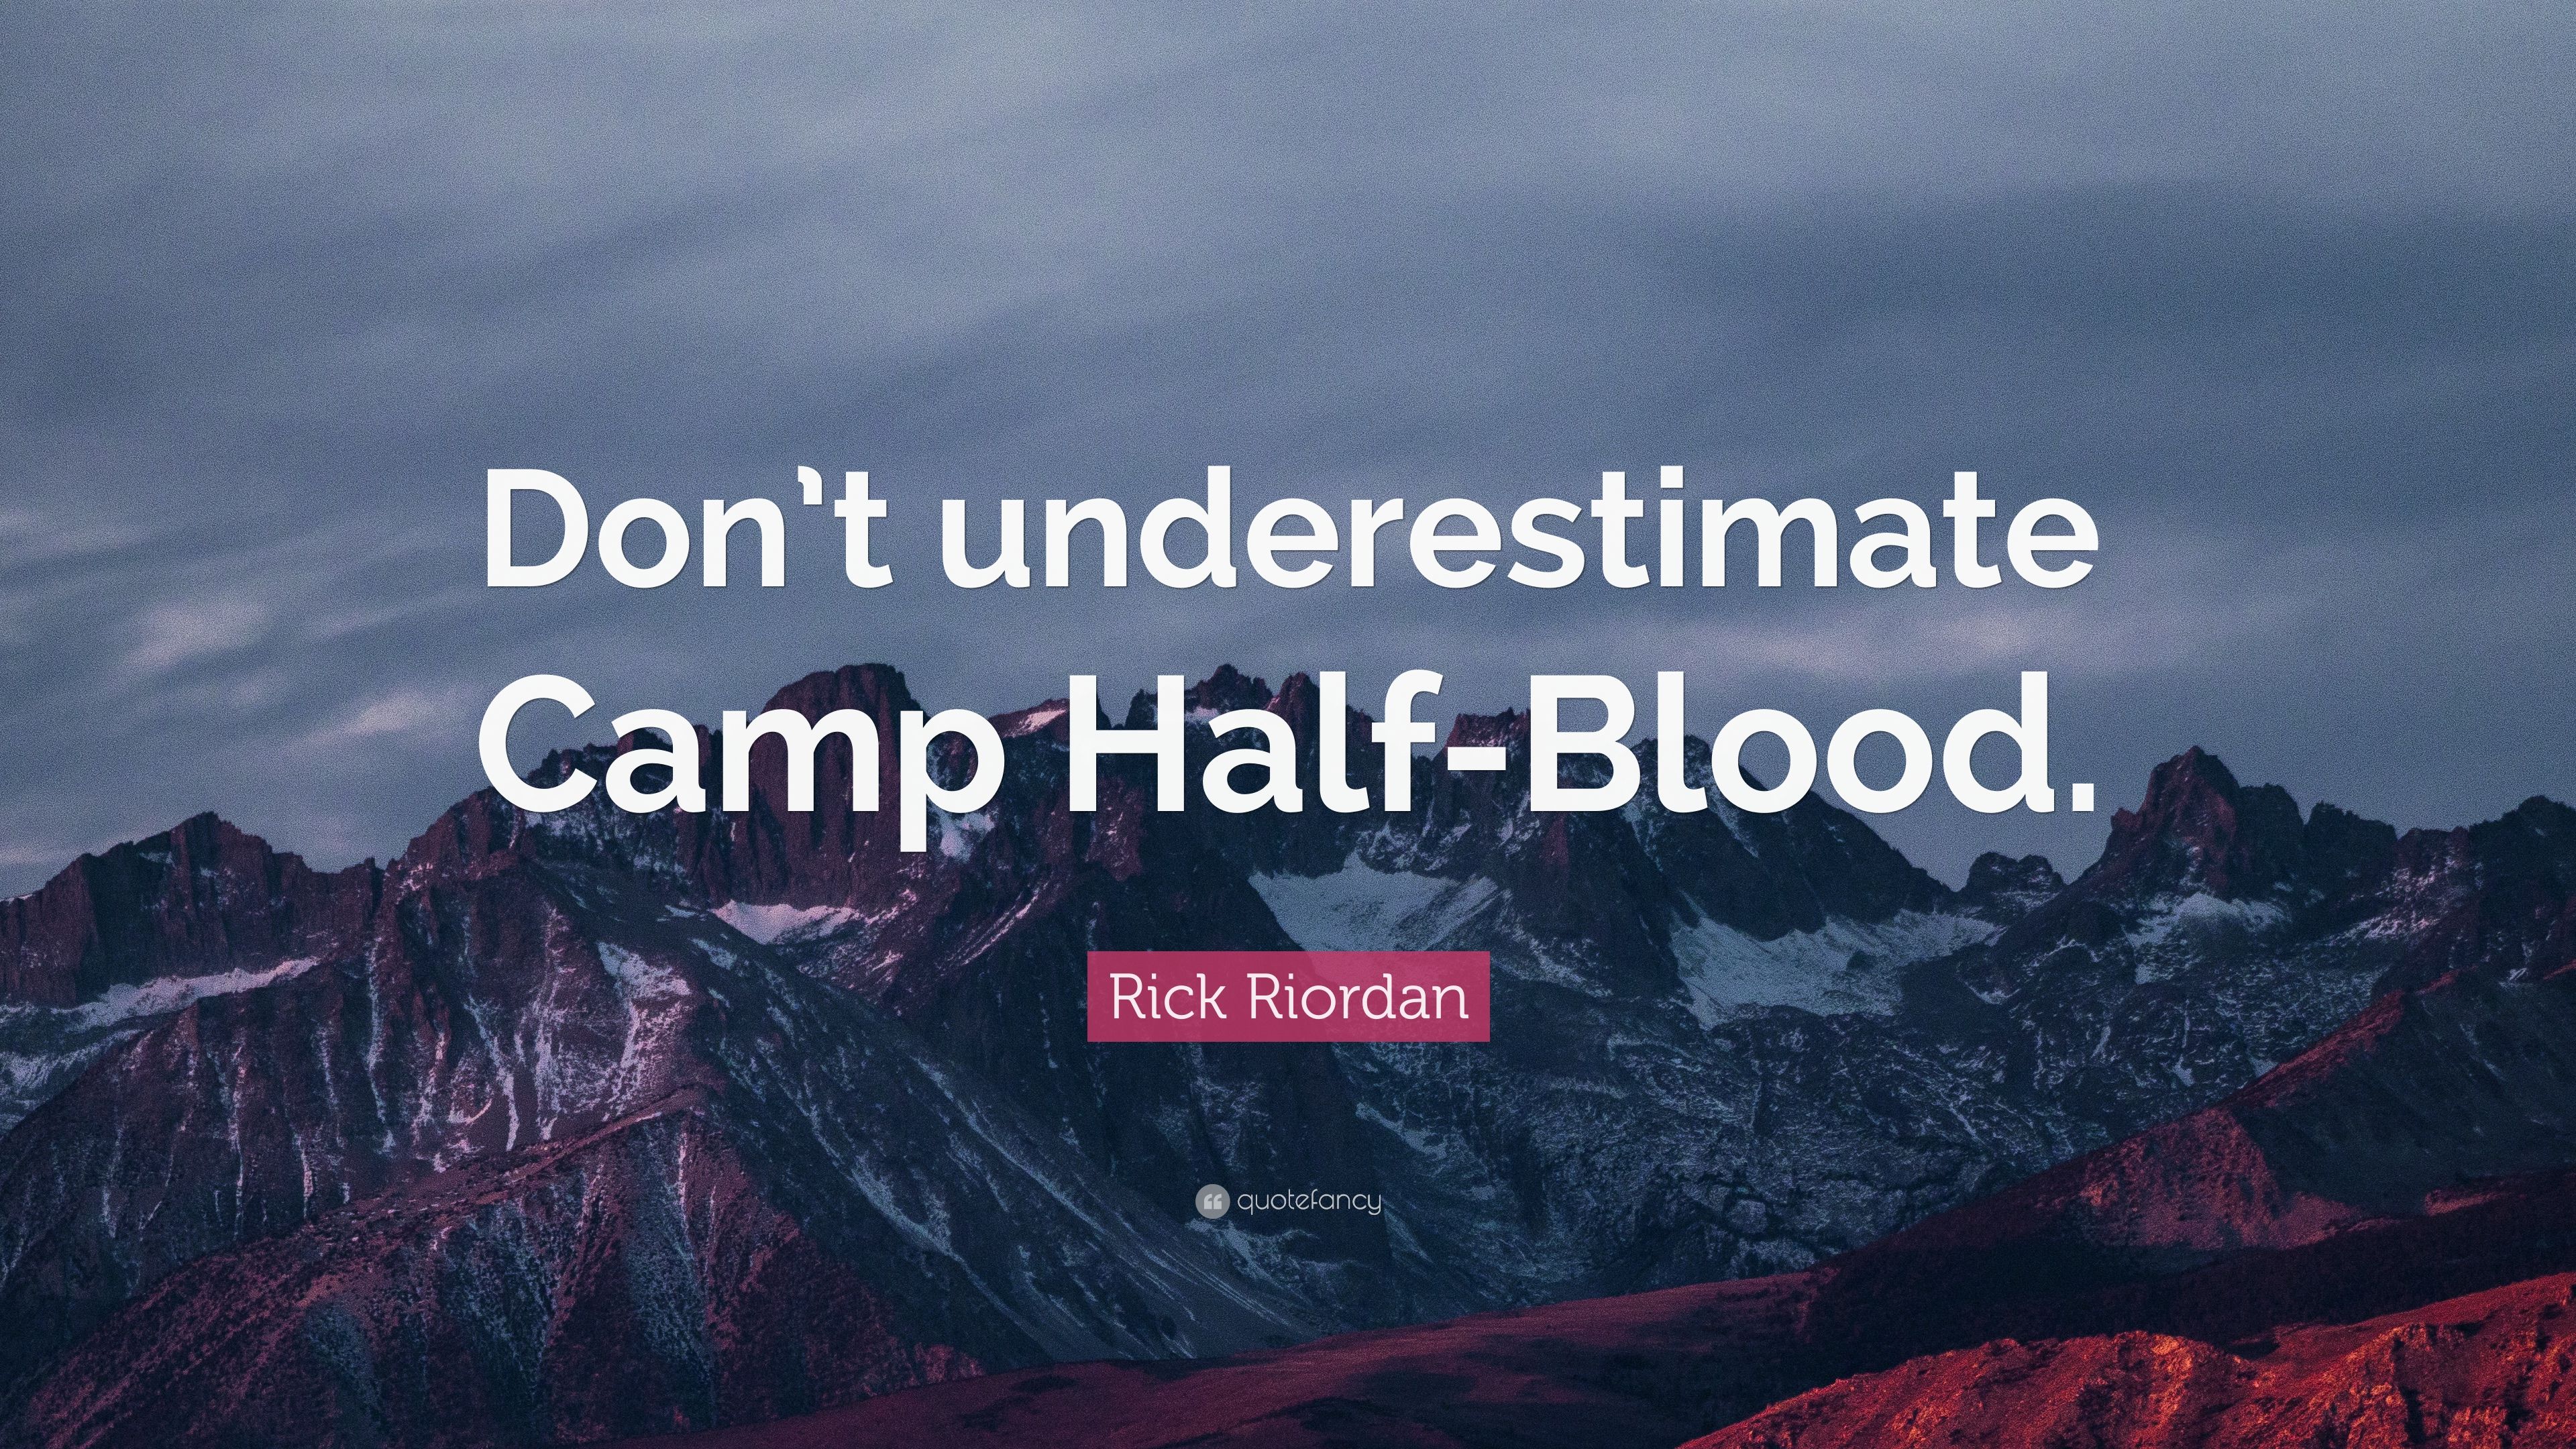 Rick Riordan Quote: “Don't Underestimate Camp Half Blood.” 6